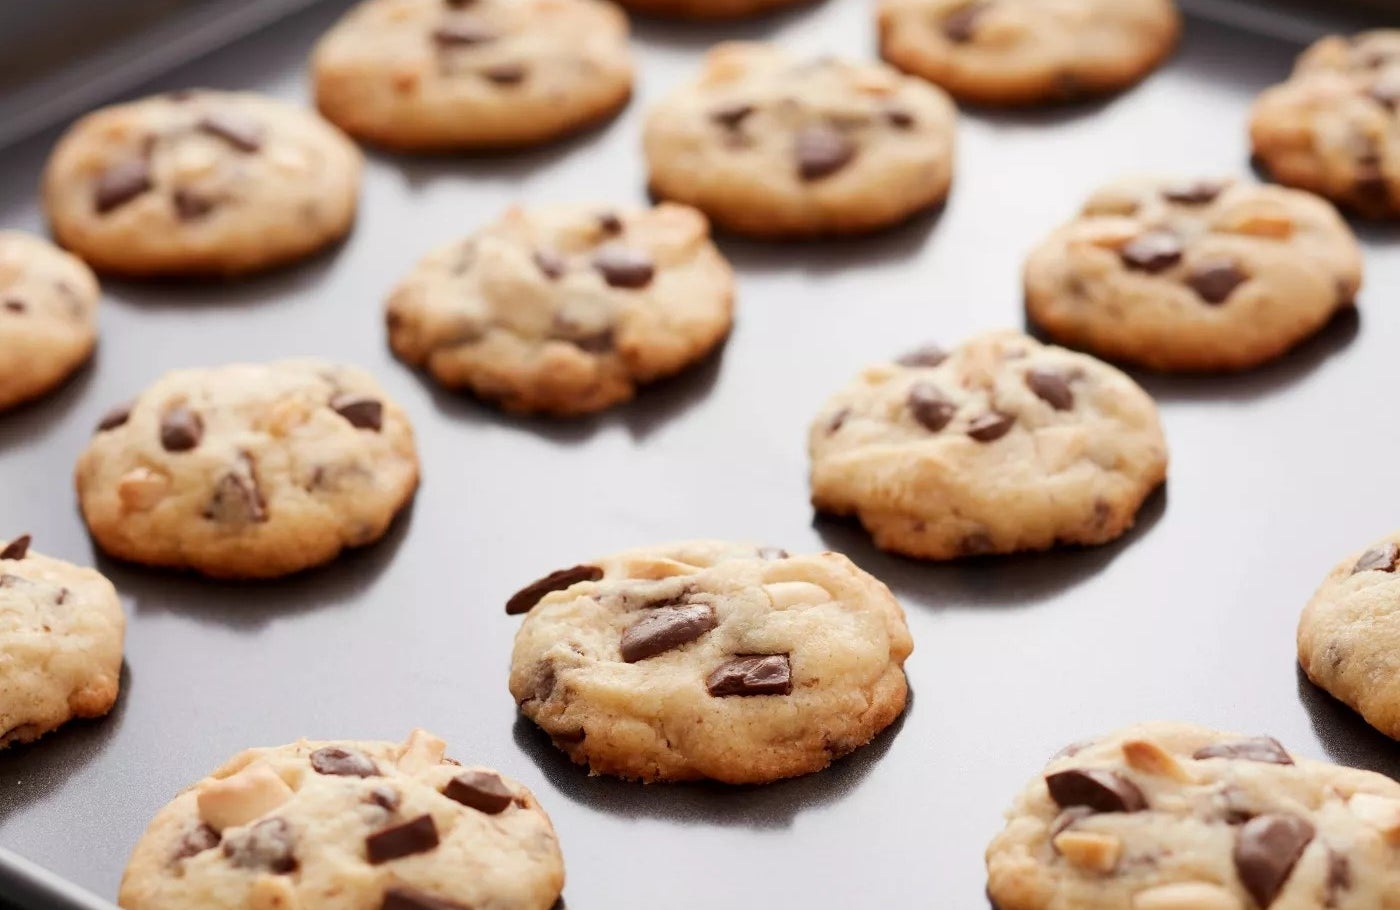 Cookies on the baking pan